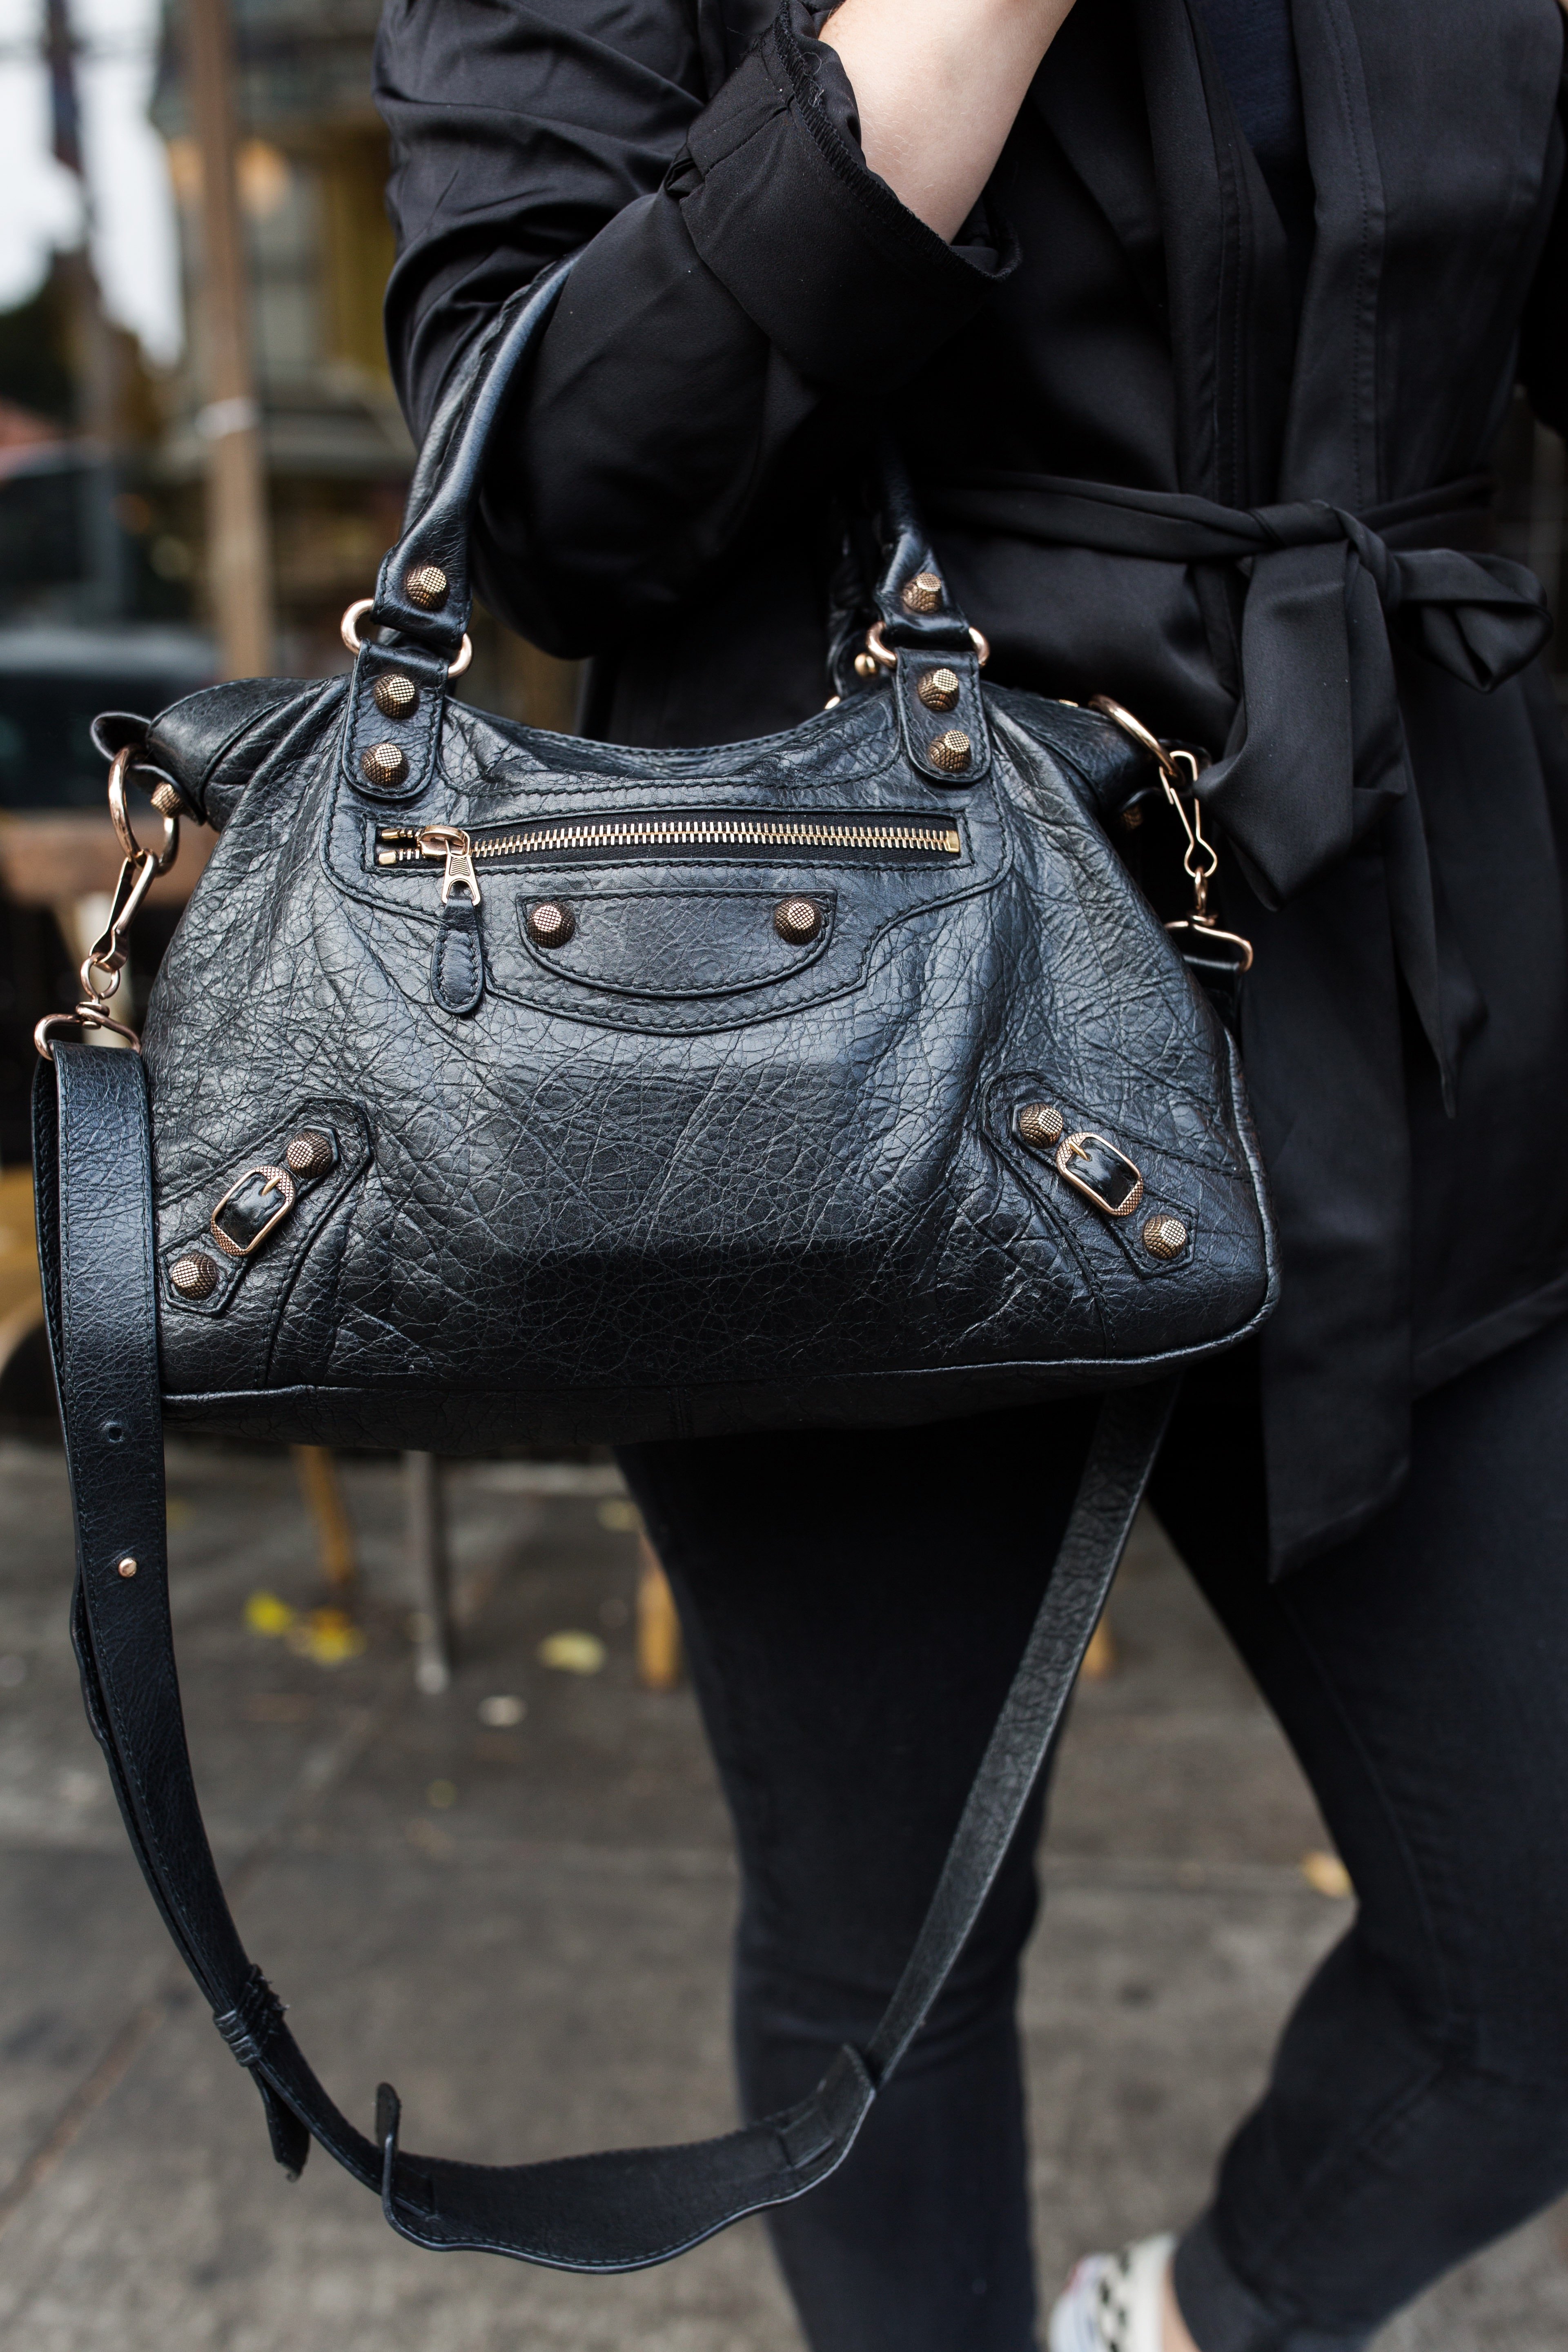 luxury handbags women bags designer ANIMAL LEATHER Karl Lagerfeld shoulder  bag | eBay